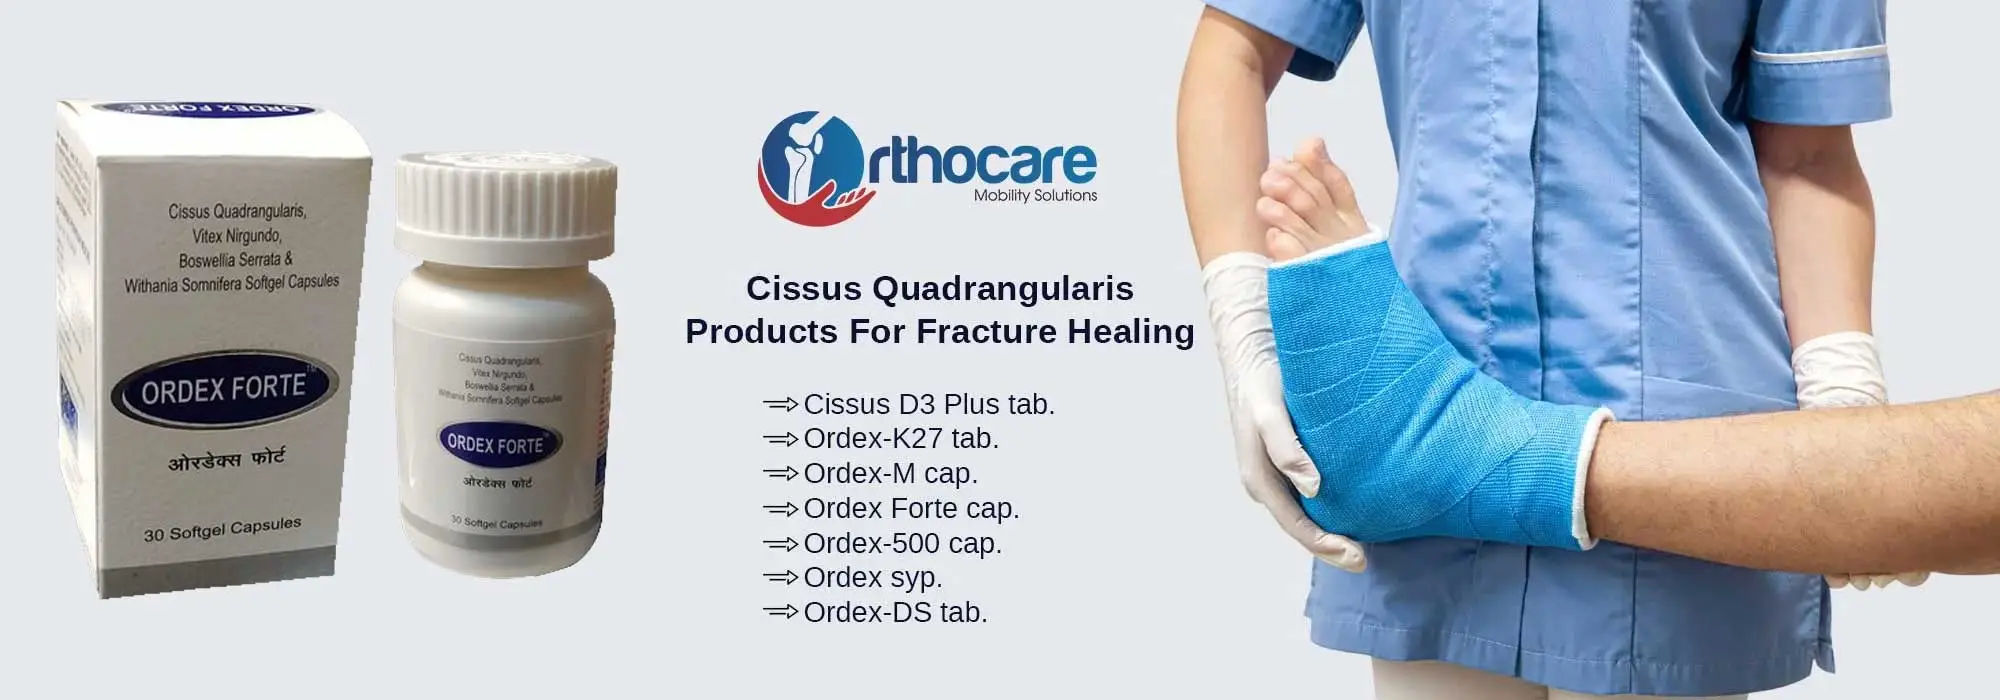 Cissus Quadrangularis Products For Fracture Healing Suppliers in Chittorgarh